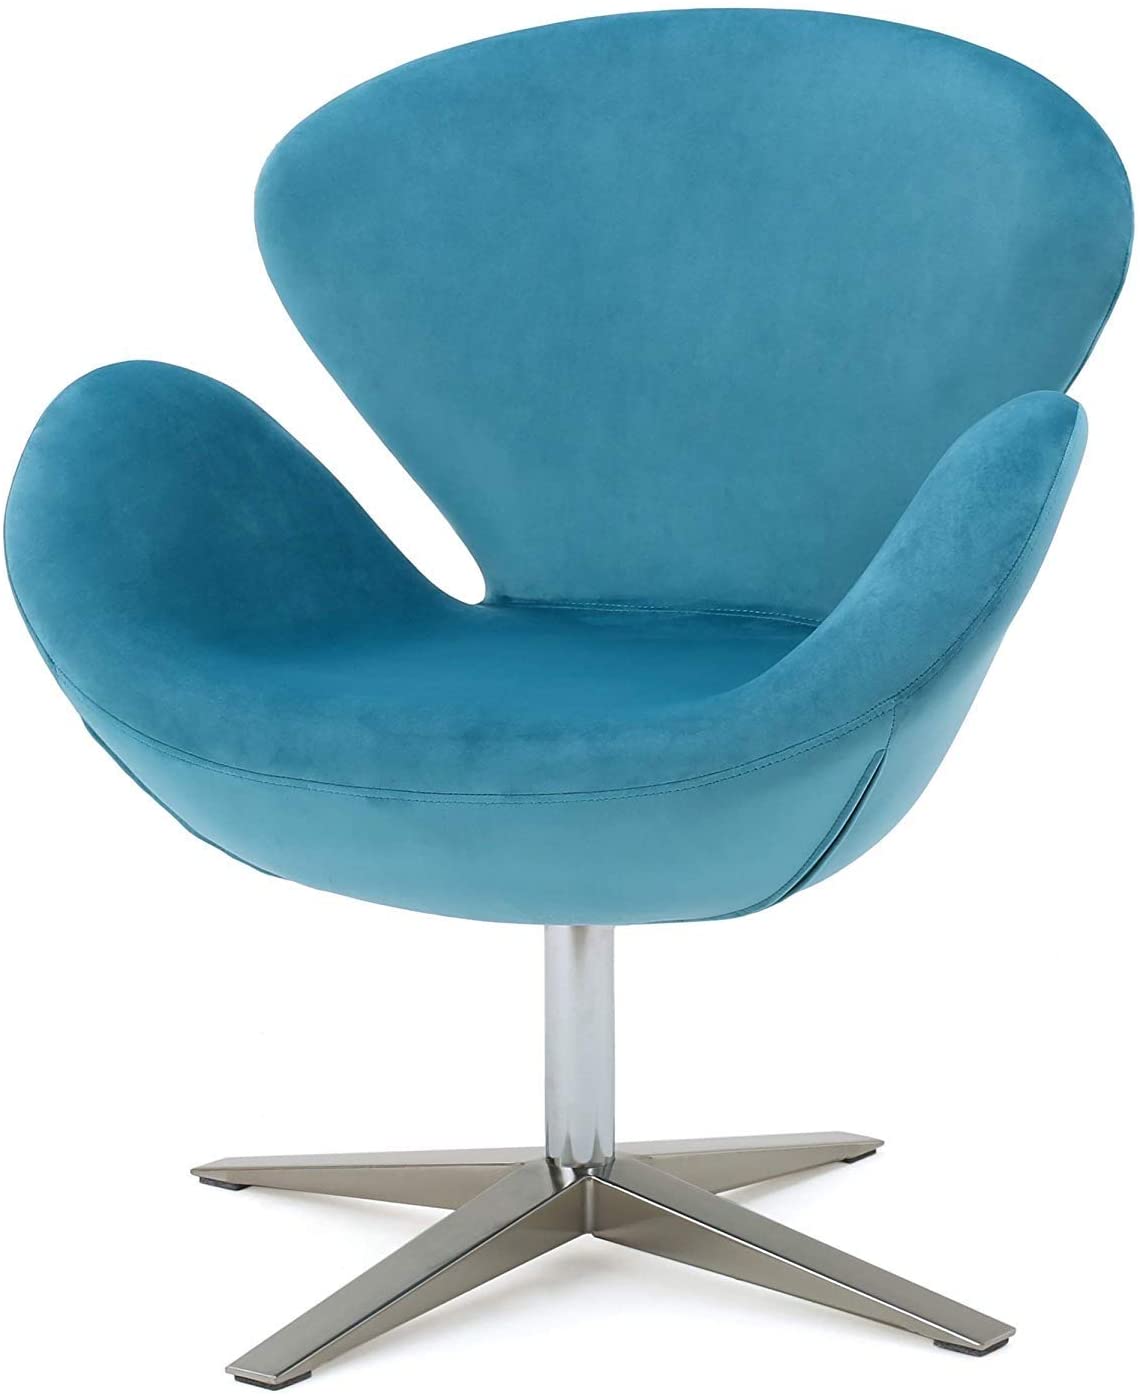 B07XZ84RGD HWZQHJY Velvet Contour Swivel Chair for Kitchen, Living Room and Dining Room, Blue